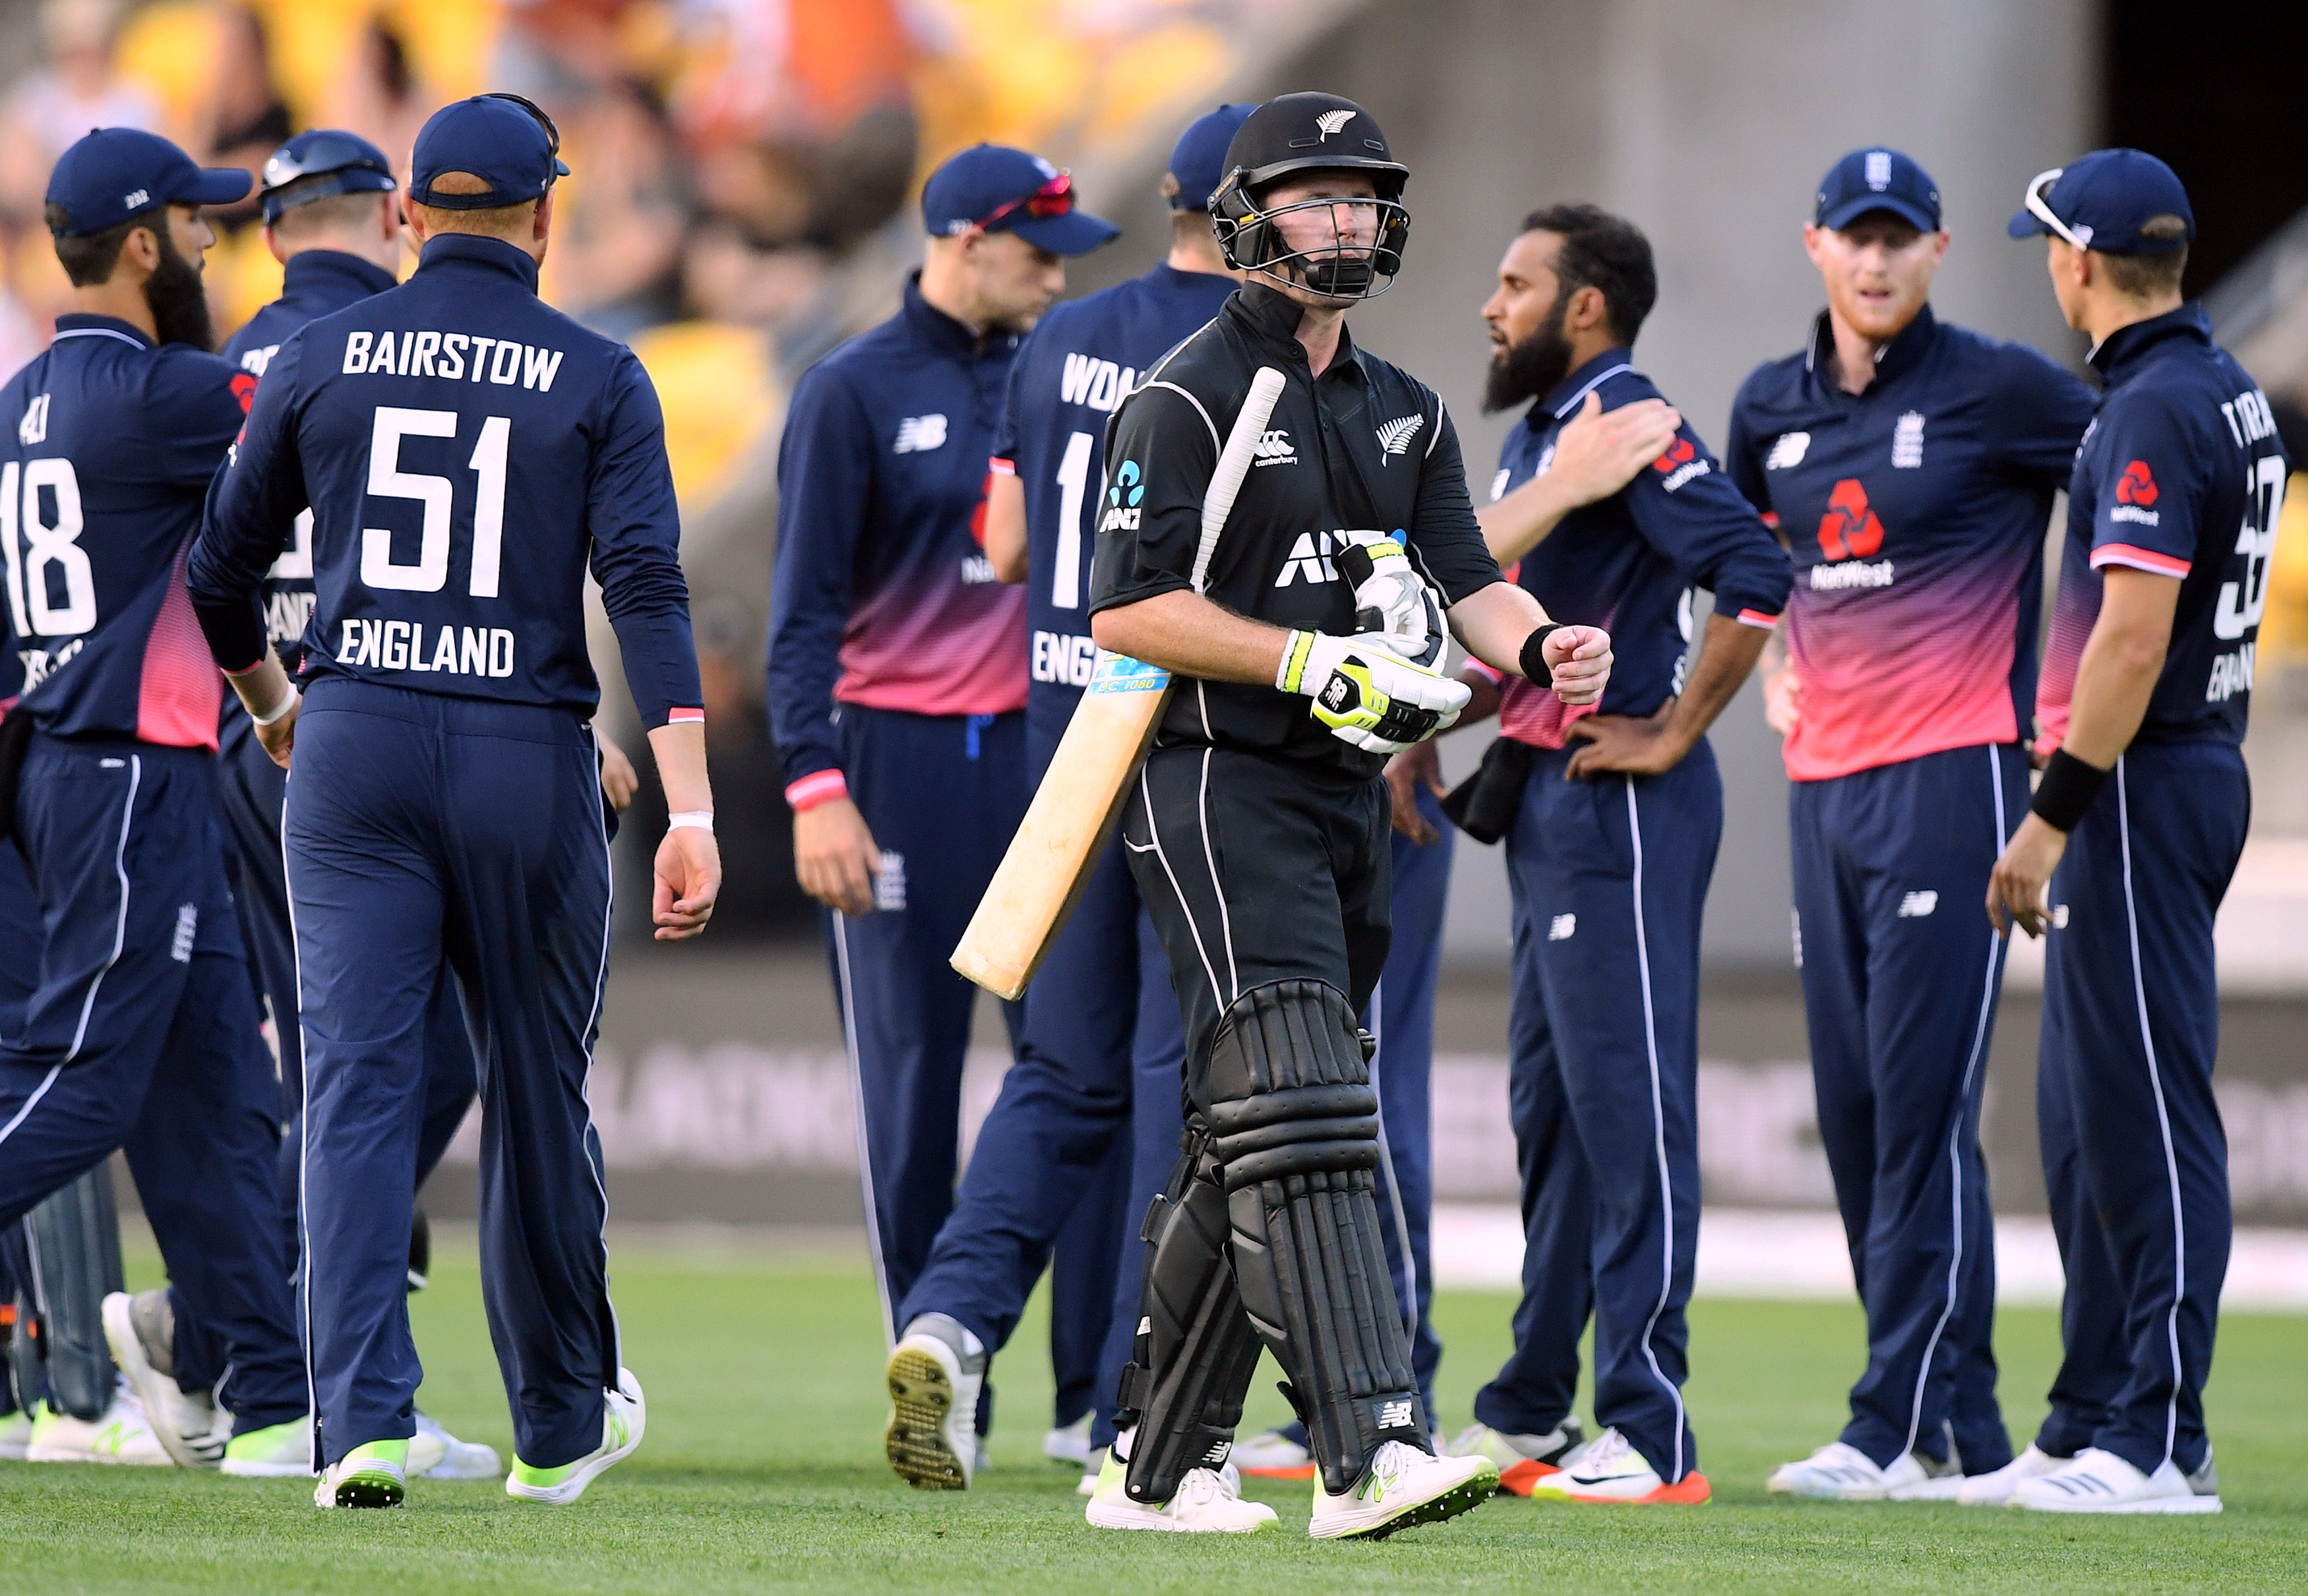 Cricket: England edge New Zealand in third ODI